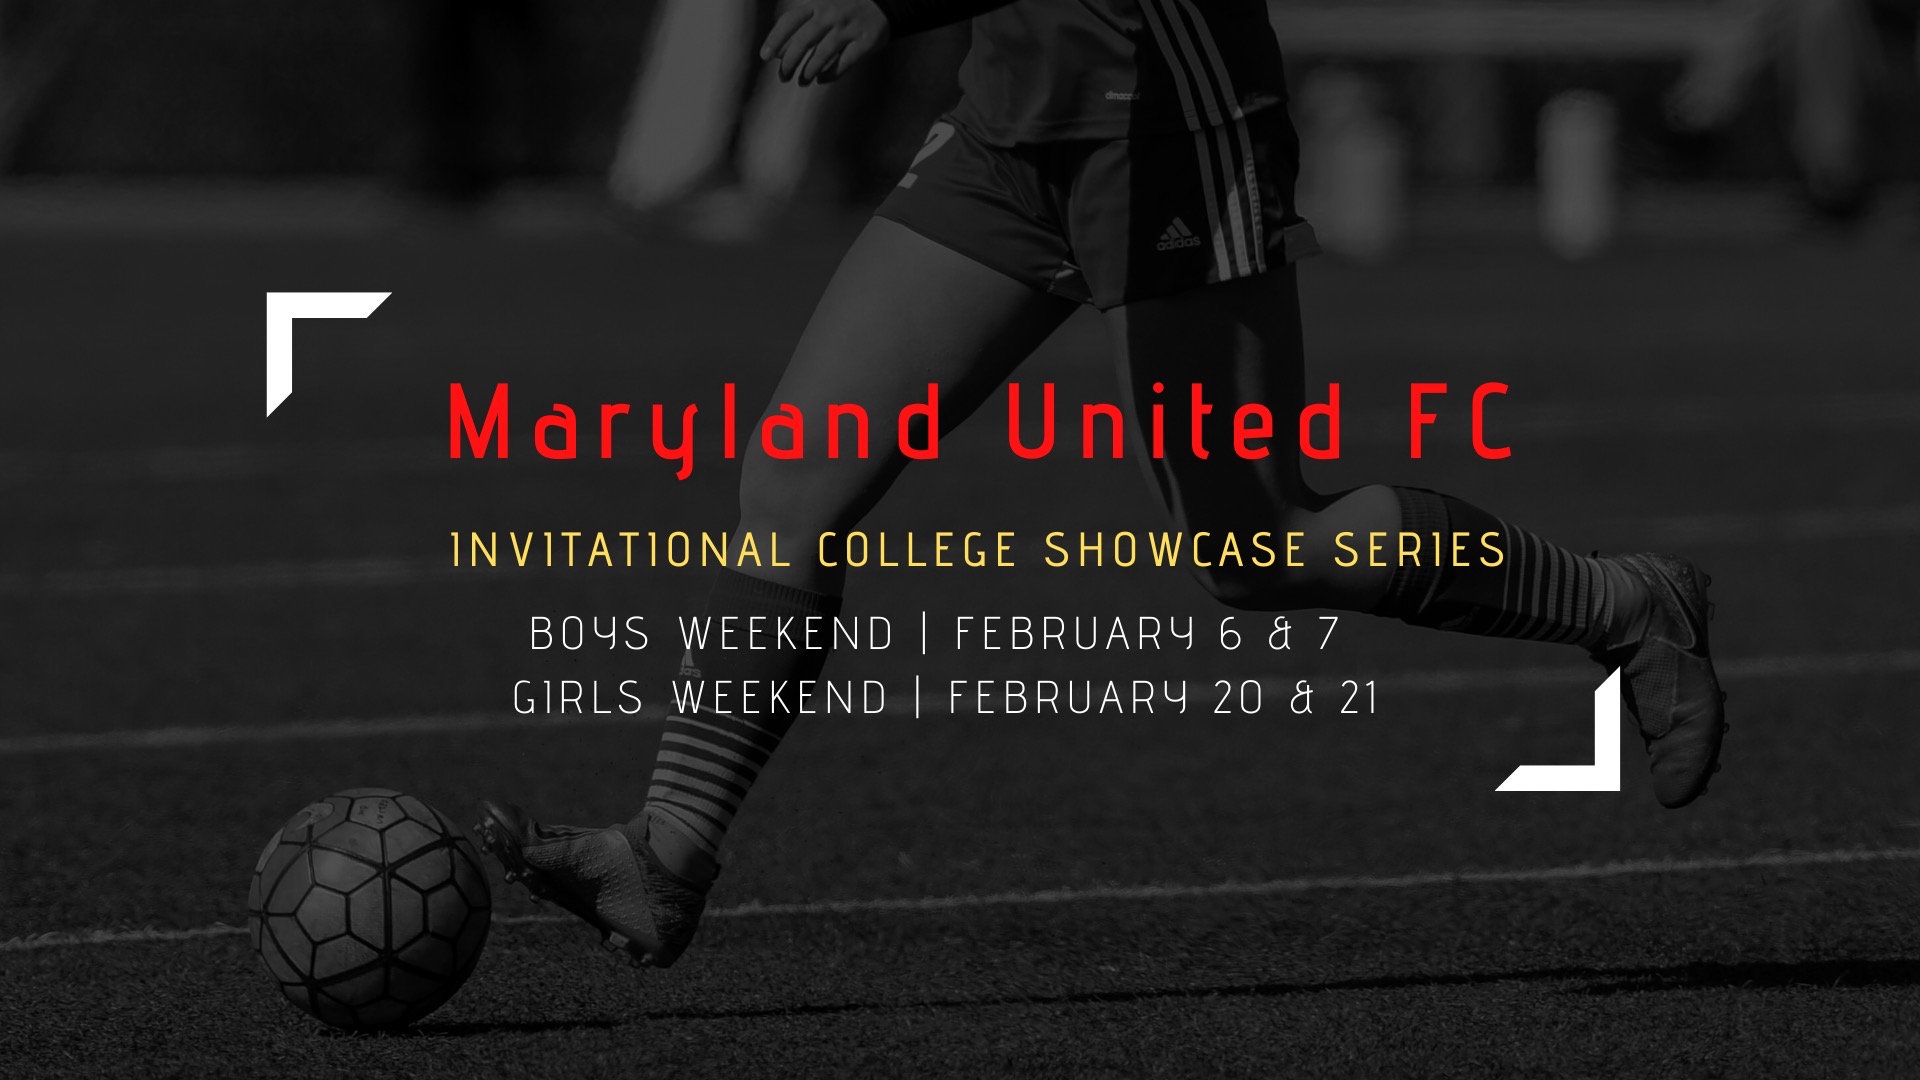 MD United College Showcase — Maryland United FC